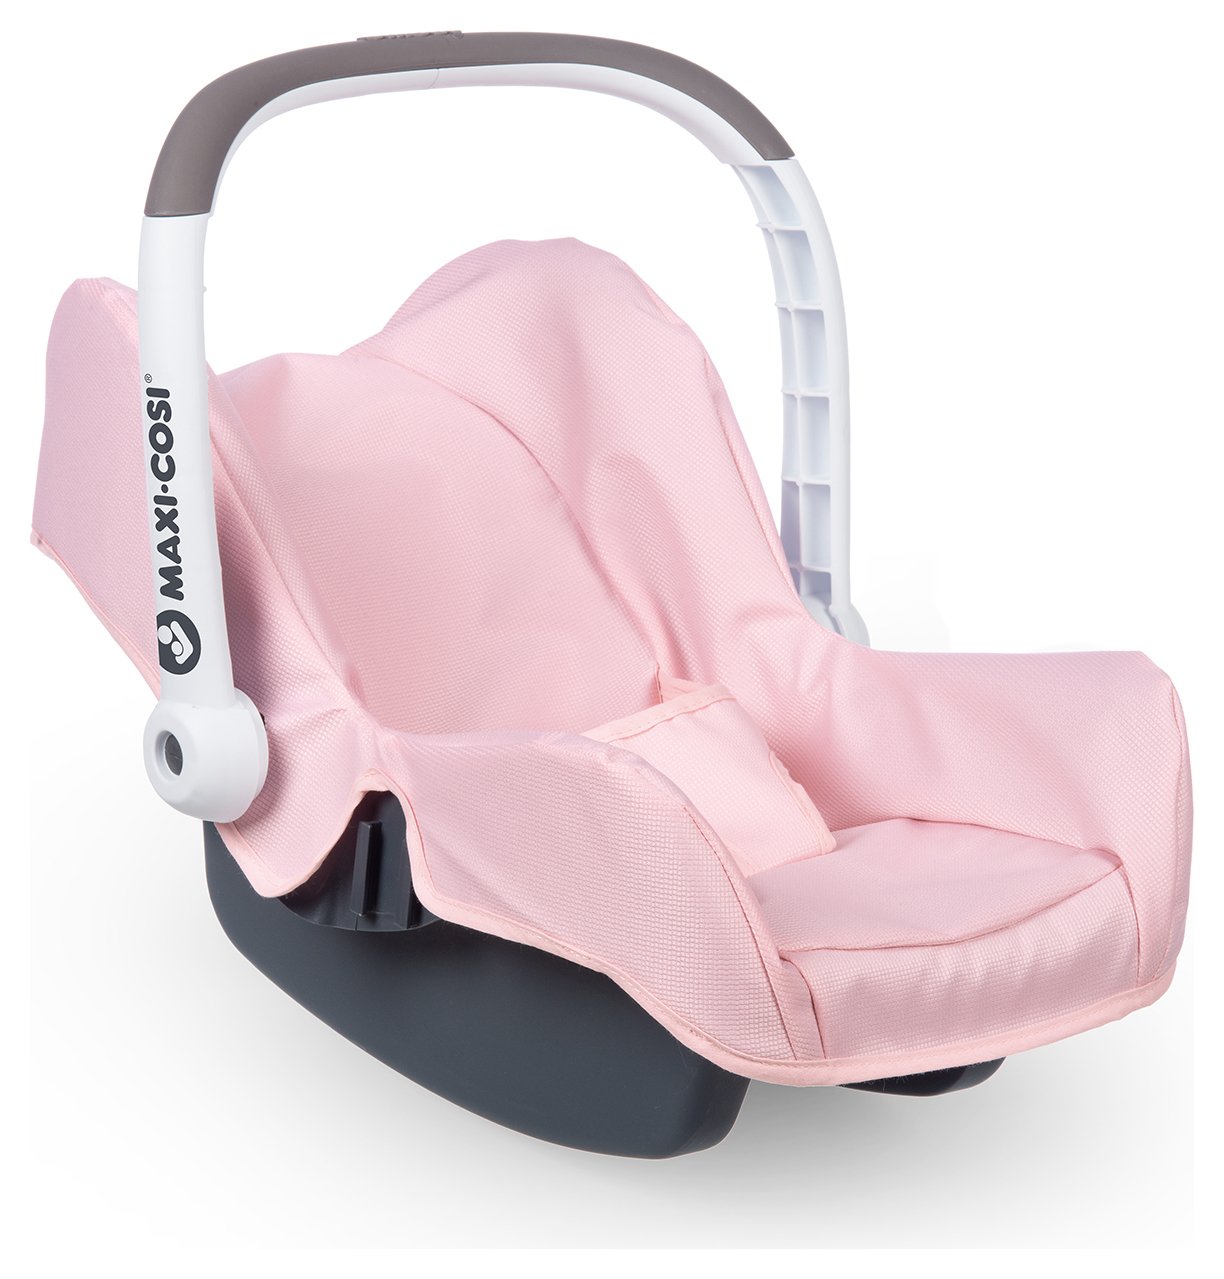 Maxi-Cosi Baby Dolls Car Seat